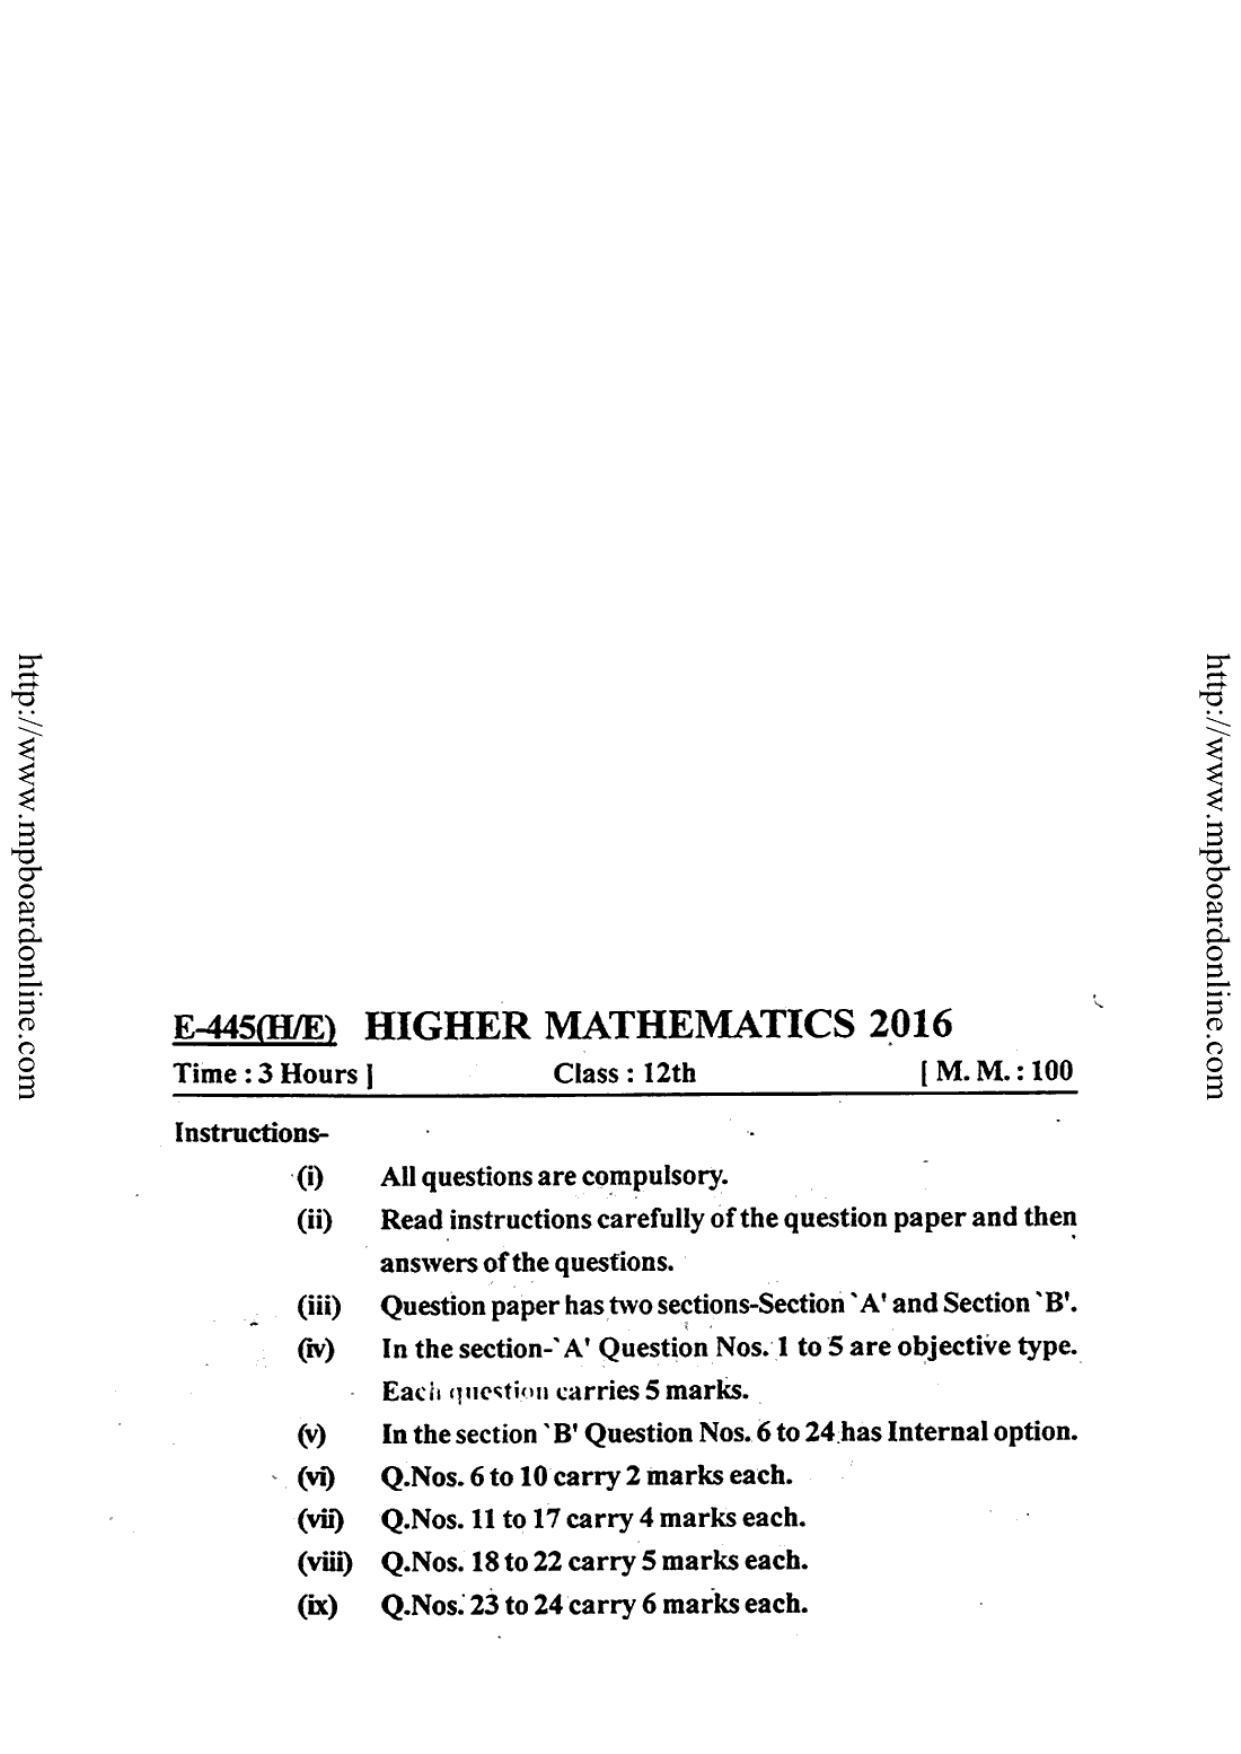 MP Board Class 12 Mathematica 2016 Question Paper - Page 5